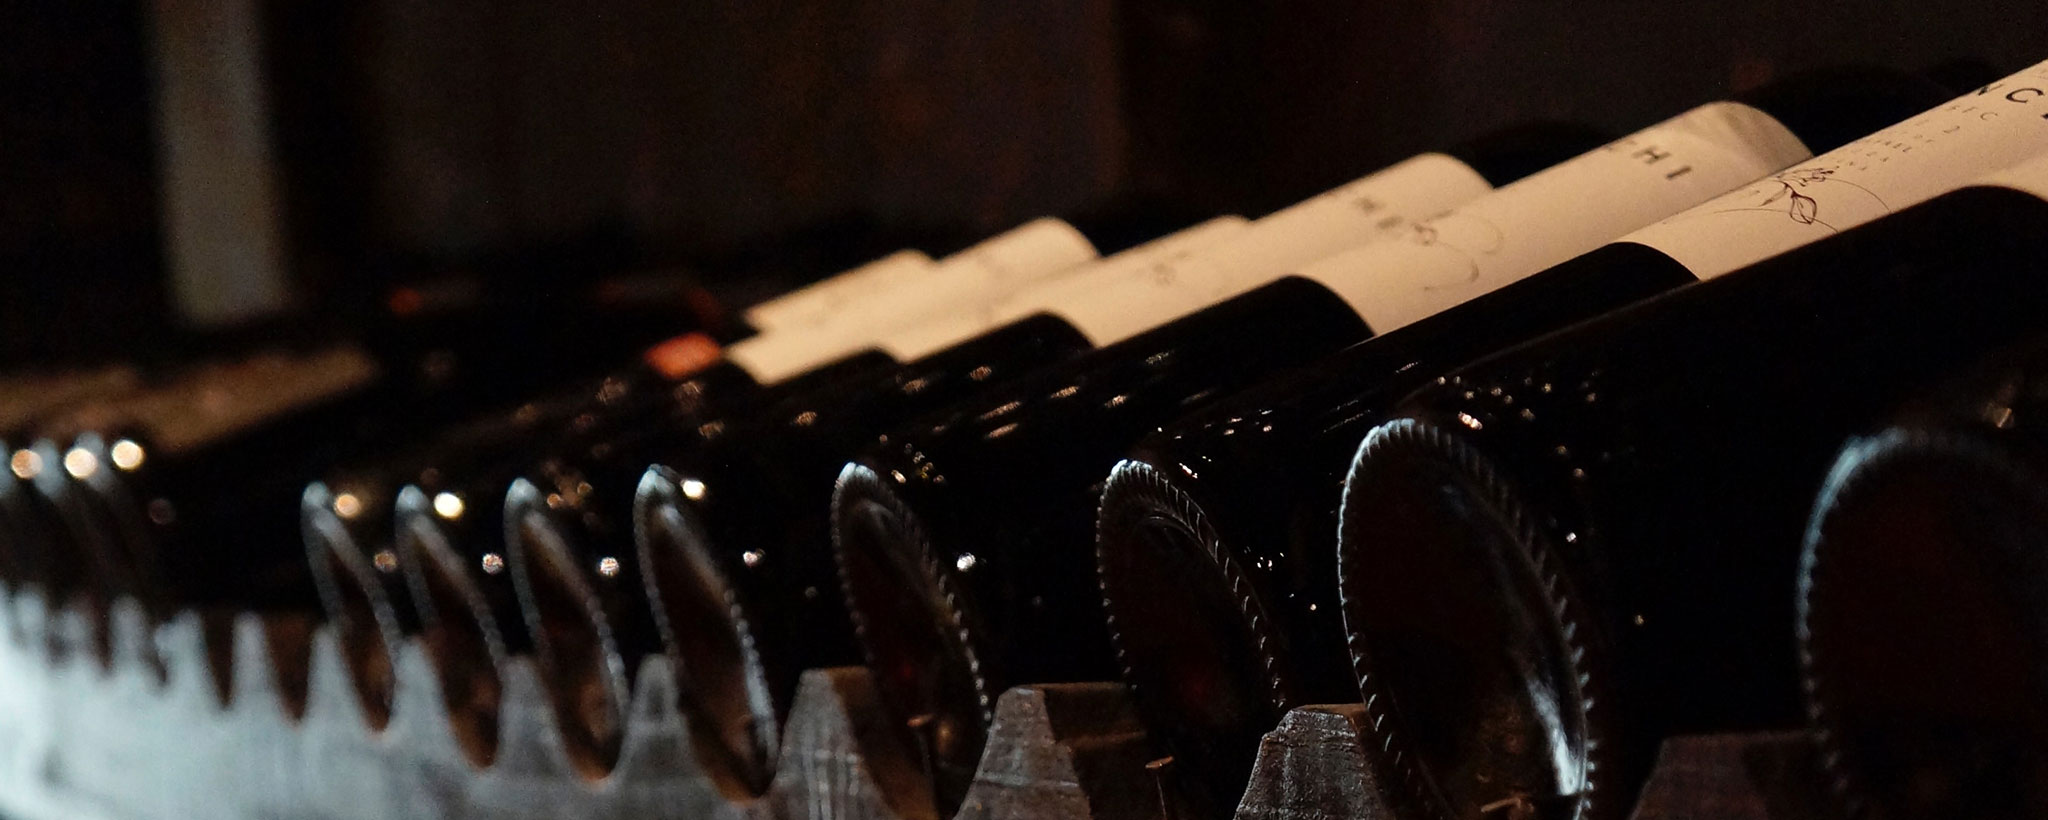 long row of bottles of wine